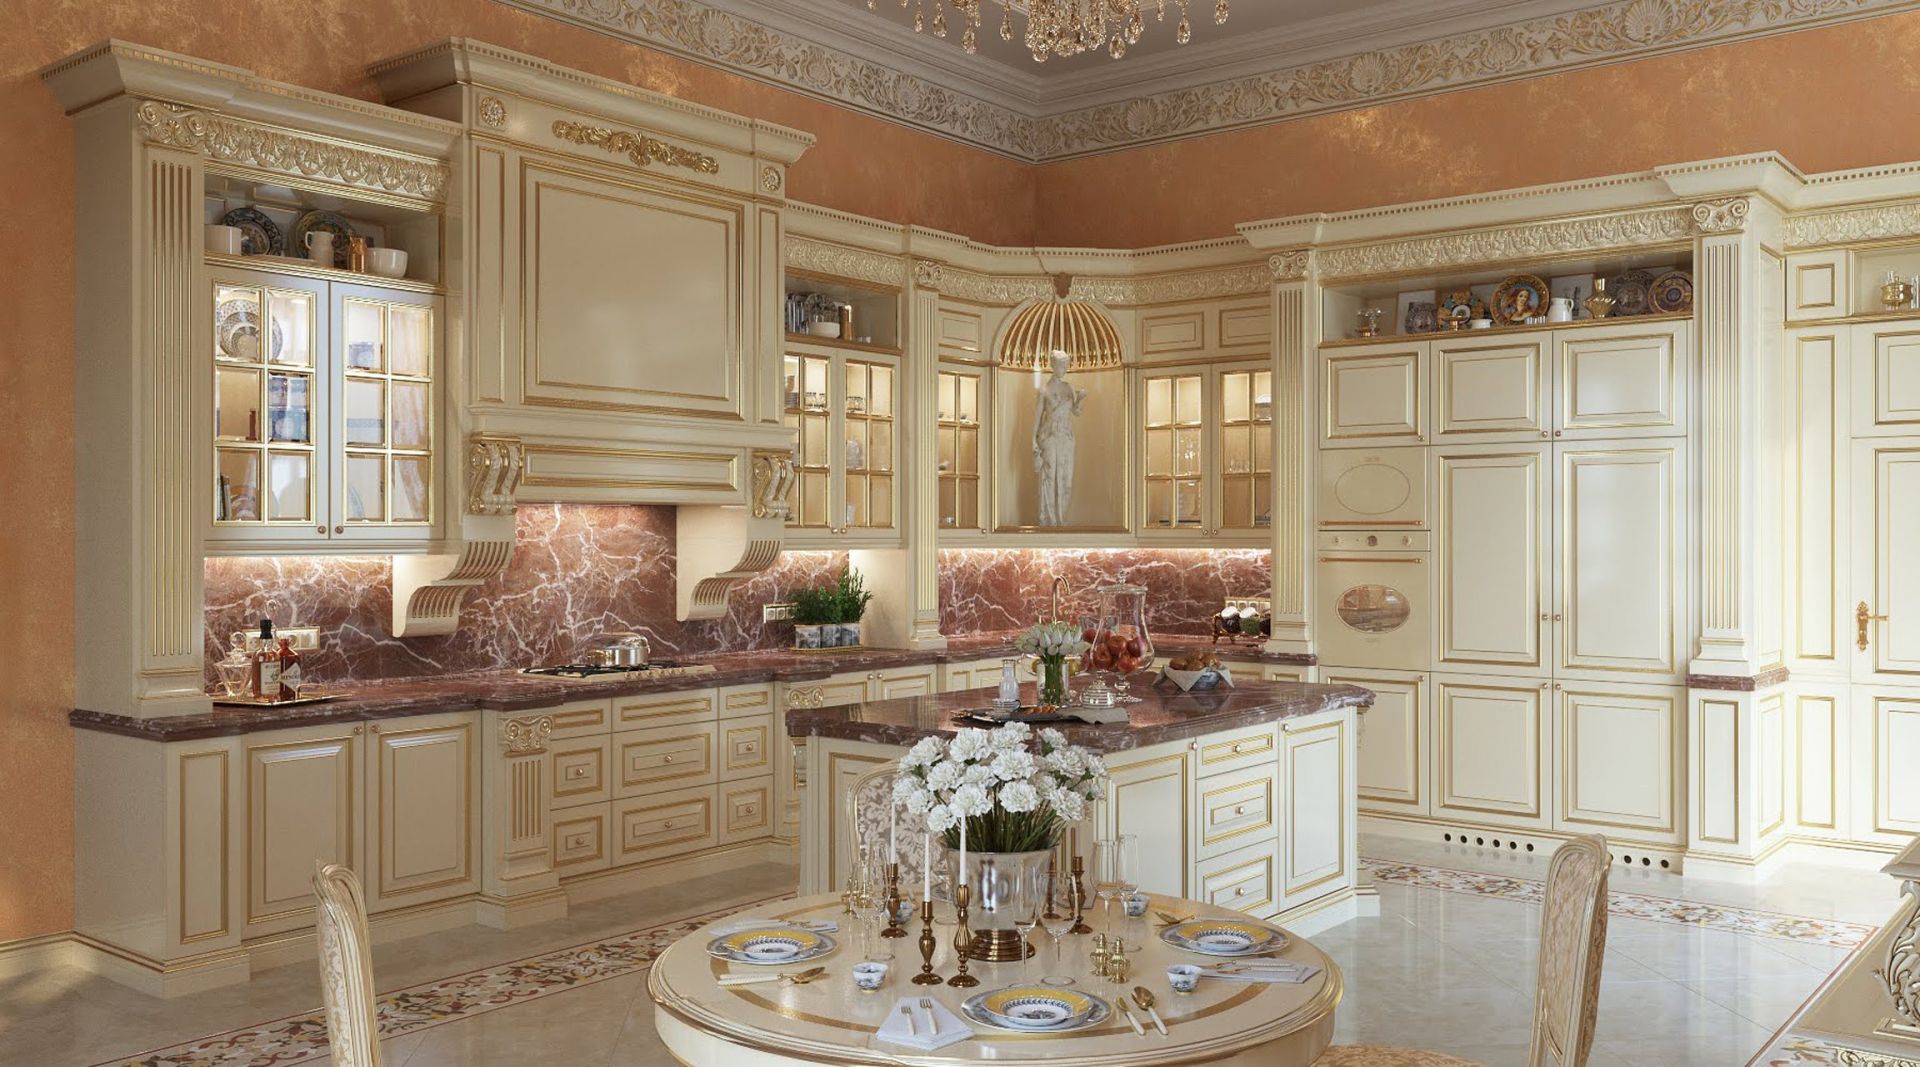 Luxurious classic kitchen interior